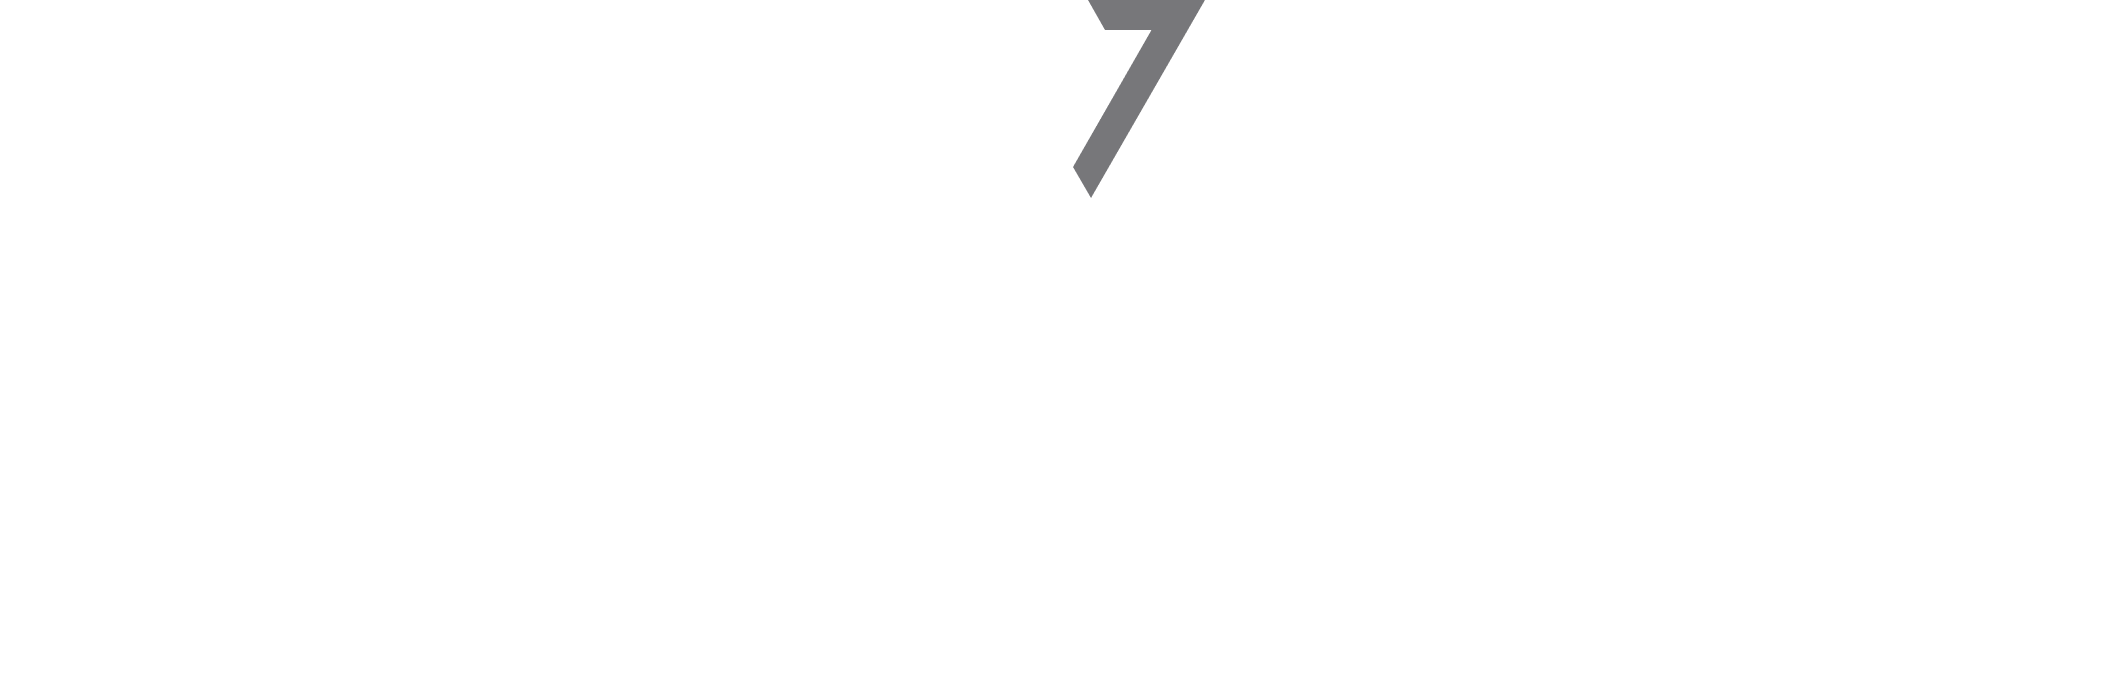 White City Living – exclusive new London development 